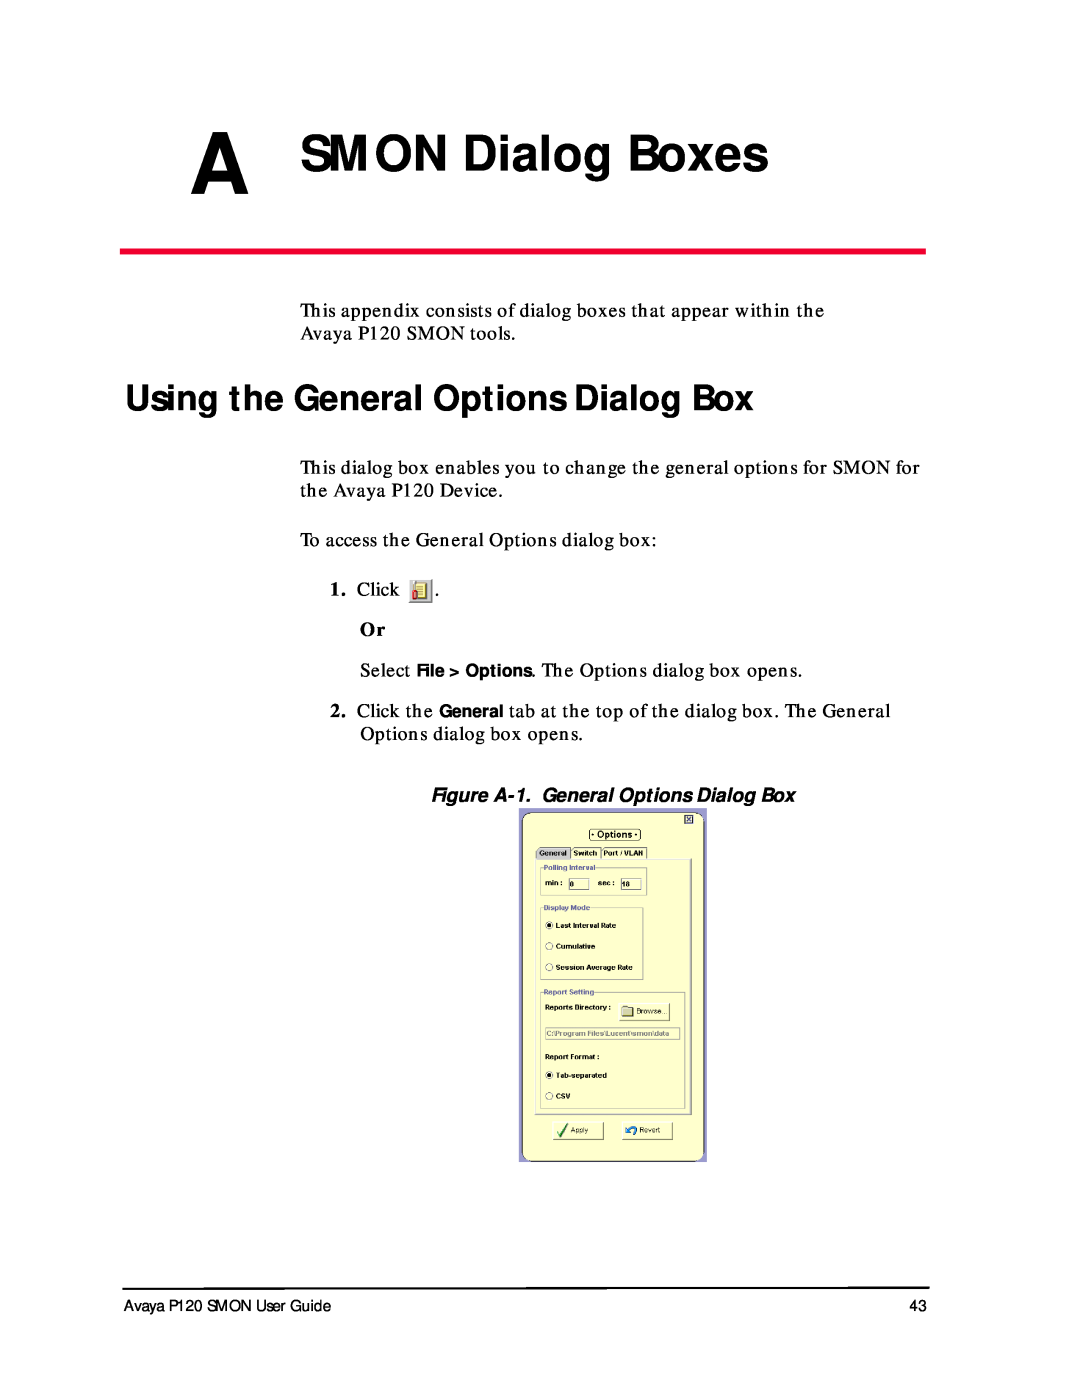 Avaya P120 SMON manual A SMON Dialog Boxes, Using the General Options Dialog Box, Figure A-1. General Options Dialog Box 